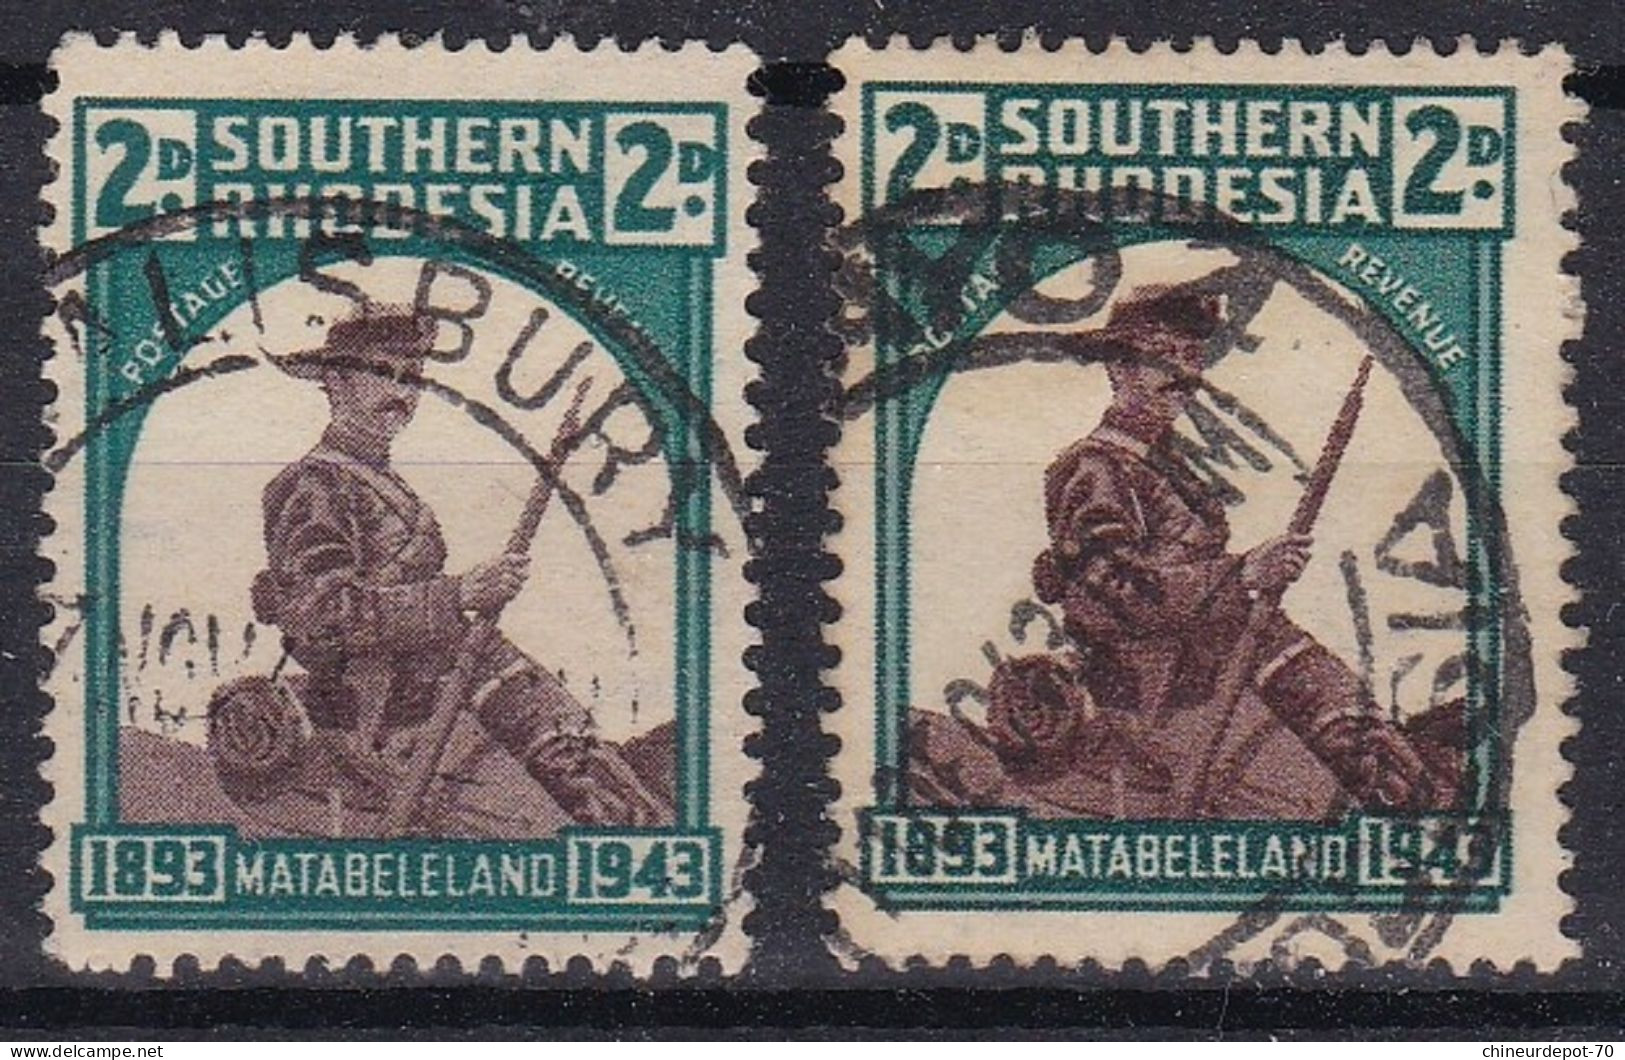 SOUTHERN RHODESIA MATABELELAND Salisbury 1943 - Southern Rhodesia (...-1964)